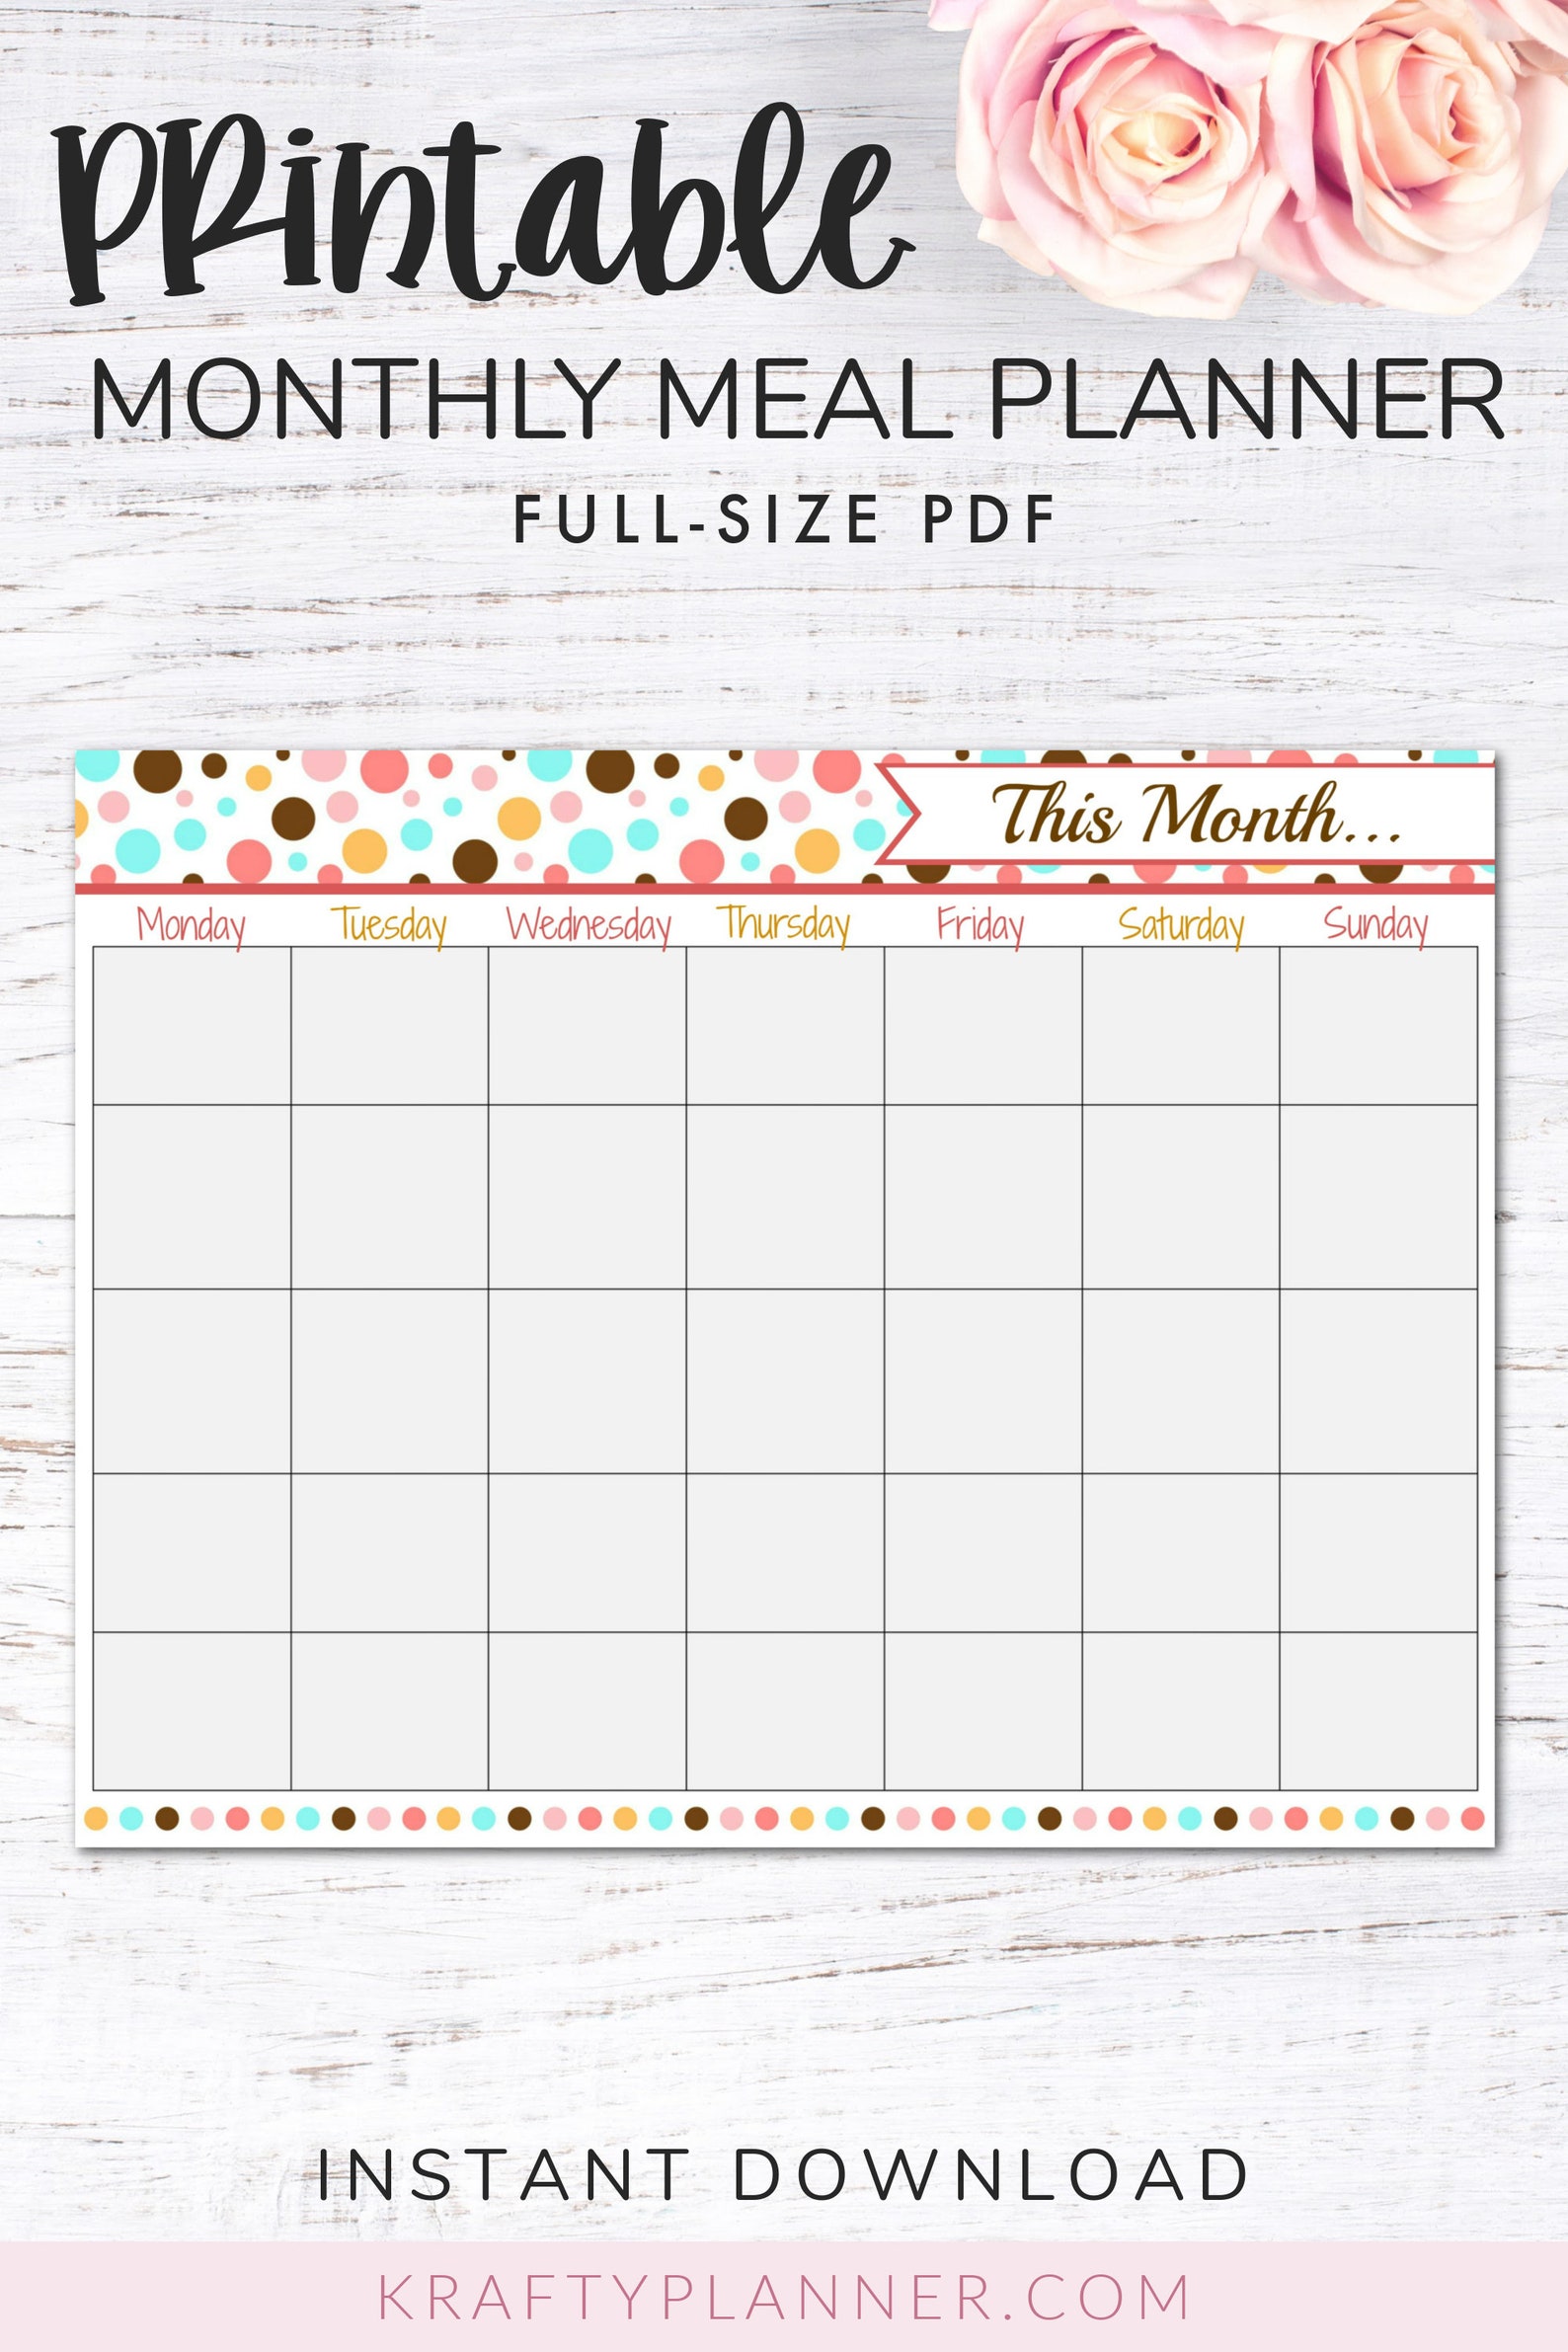 monthly menu calendar editable